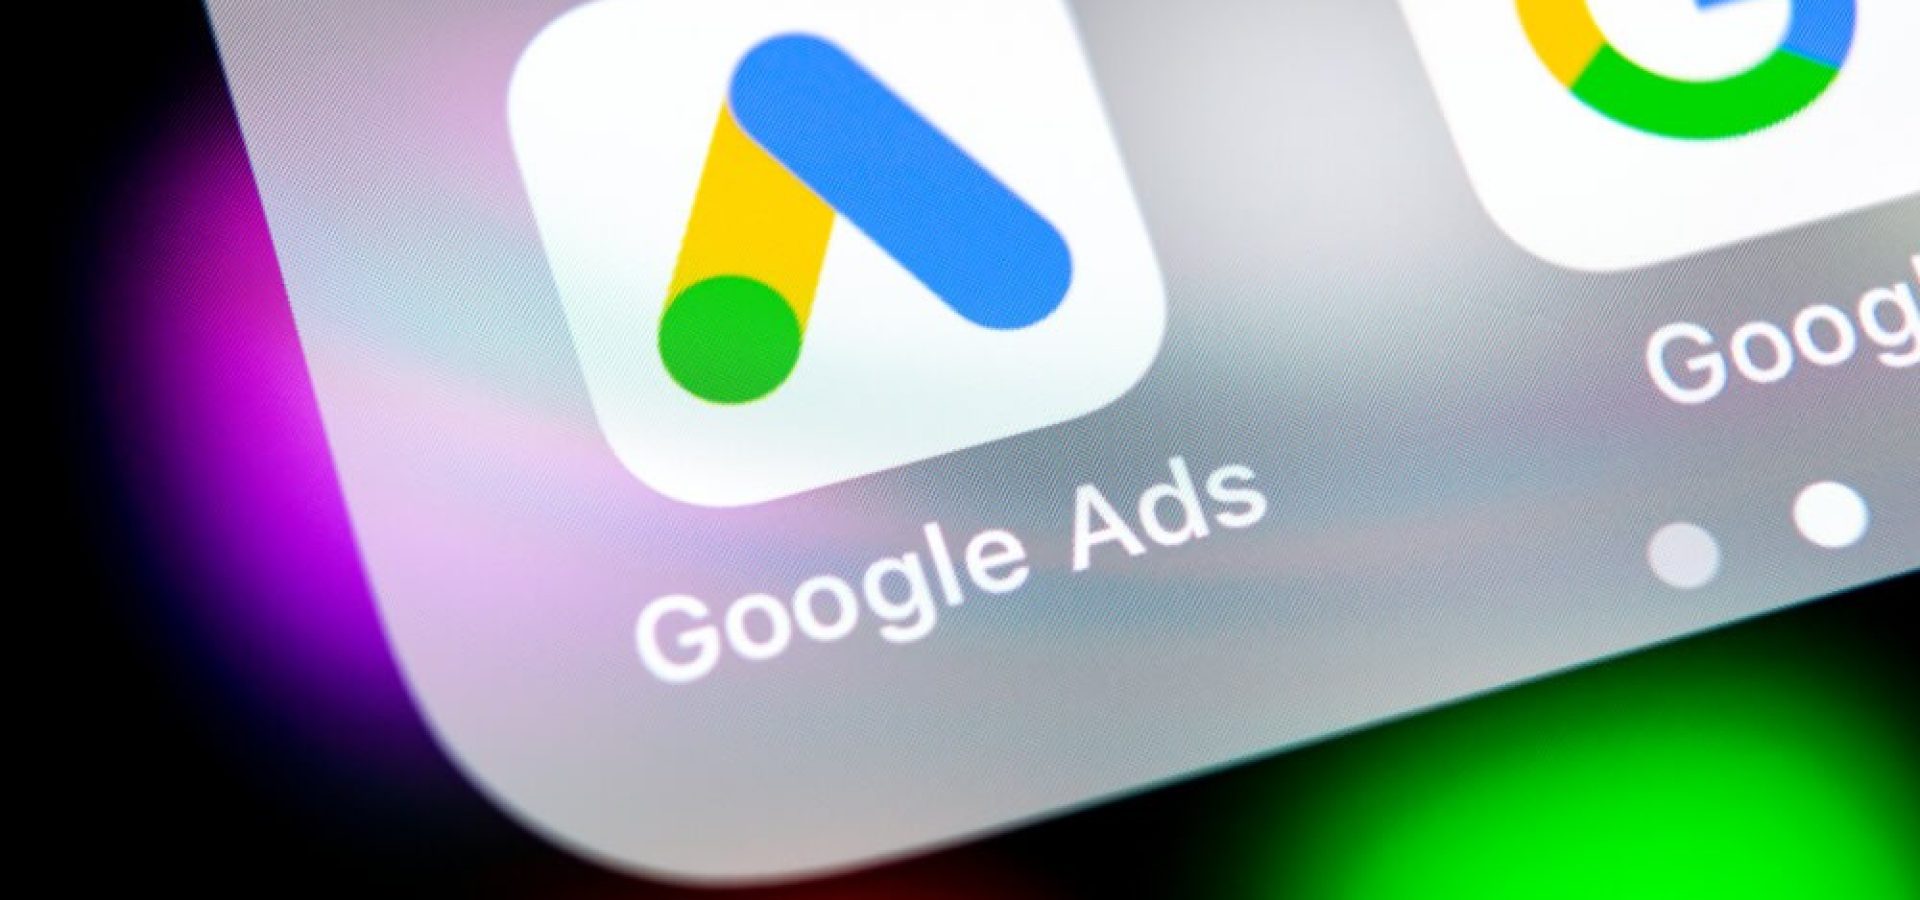 Alphabet' Google ads app on the screen of smartphone